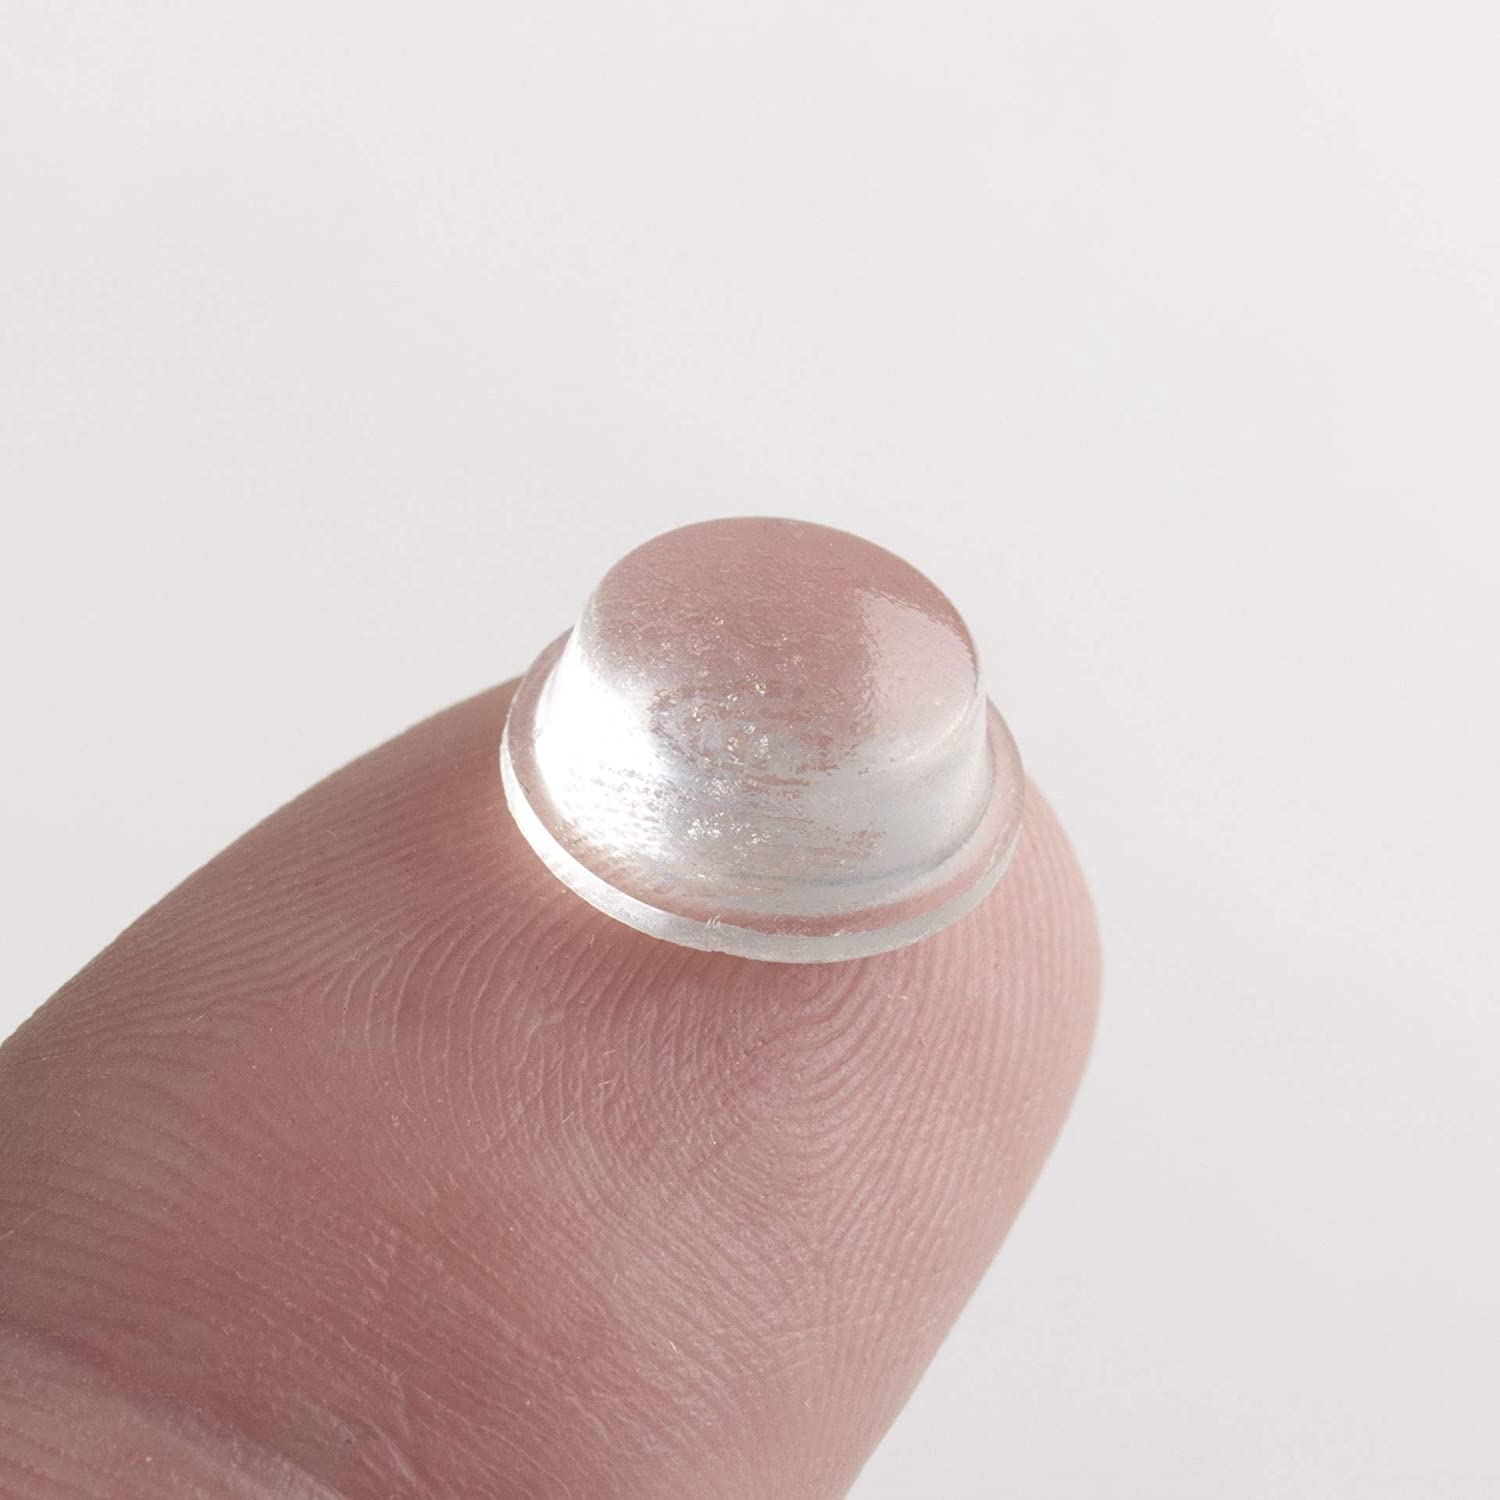 LouMaxx Gummipuffer - 24x Puffer transparent 11mm Ø - Gumminoppen für Glasplatten – Elastikpuffer transparent selbstklebend – Anschlagpuffer